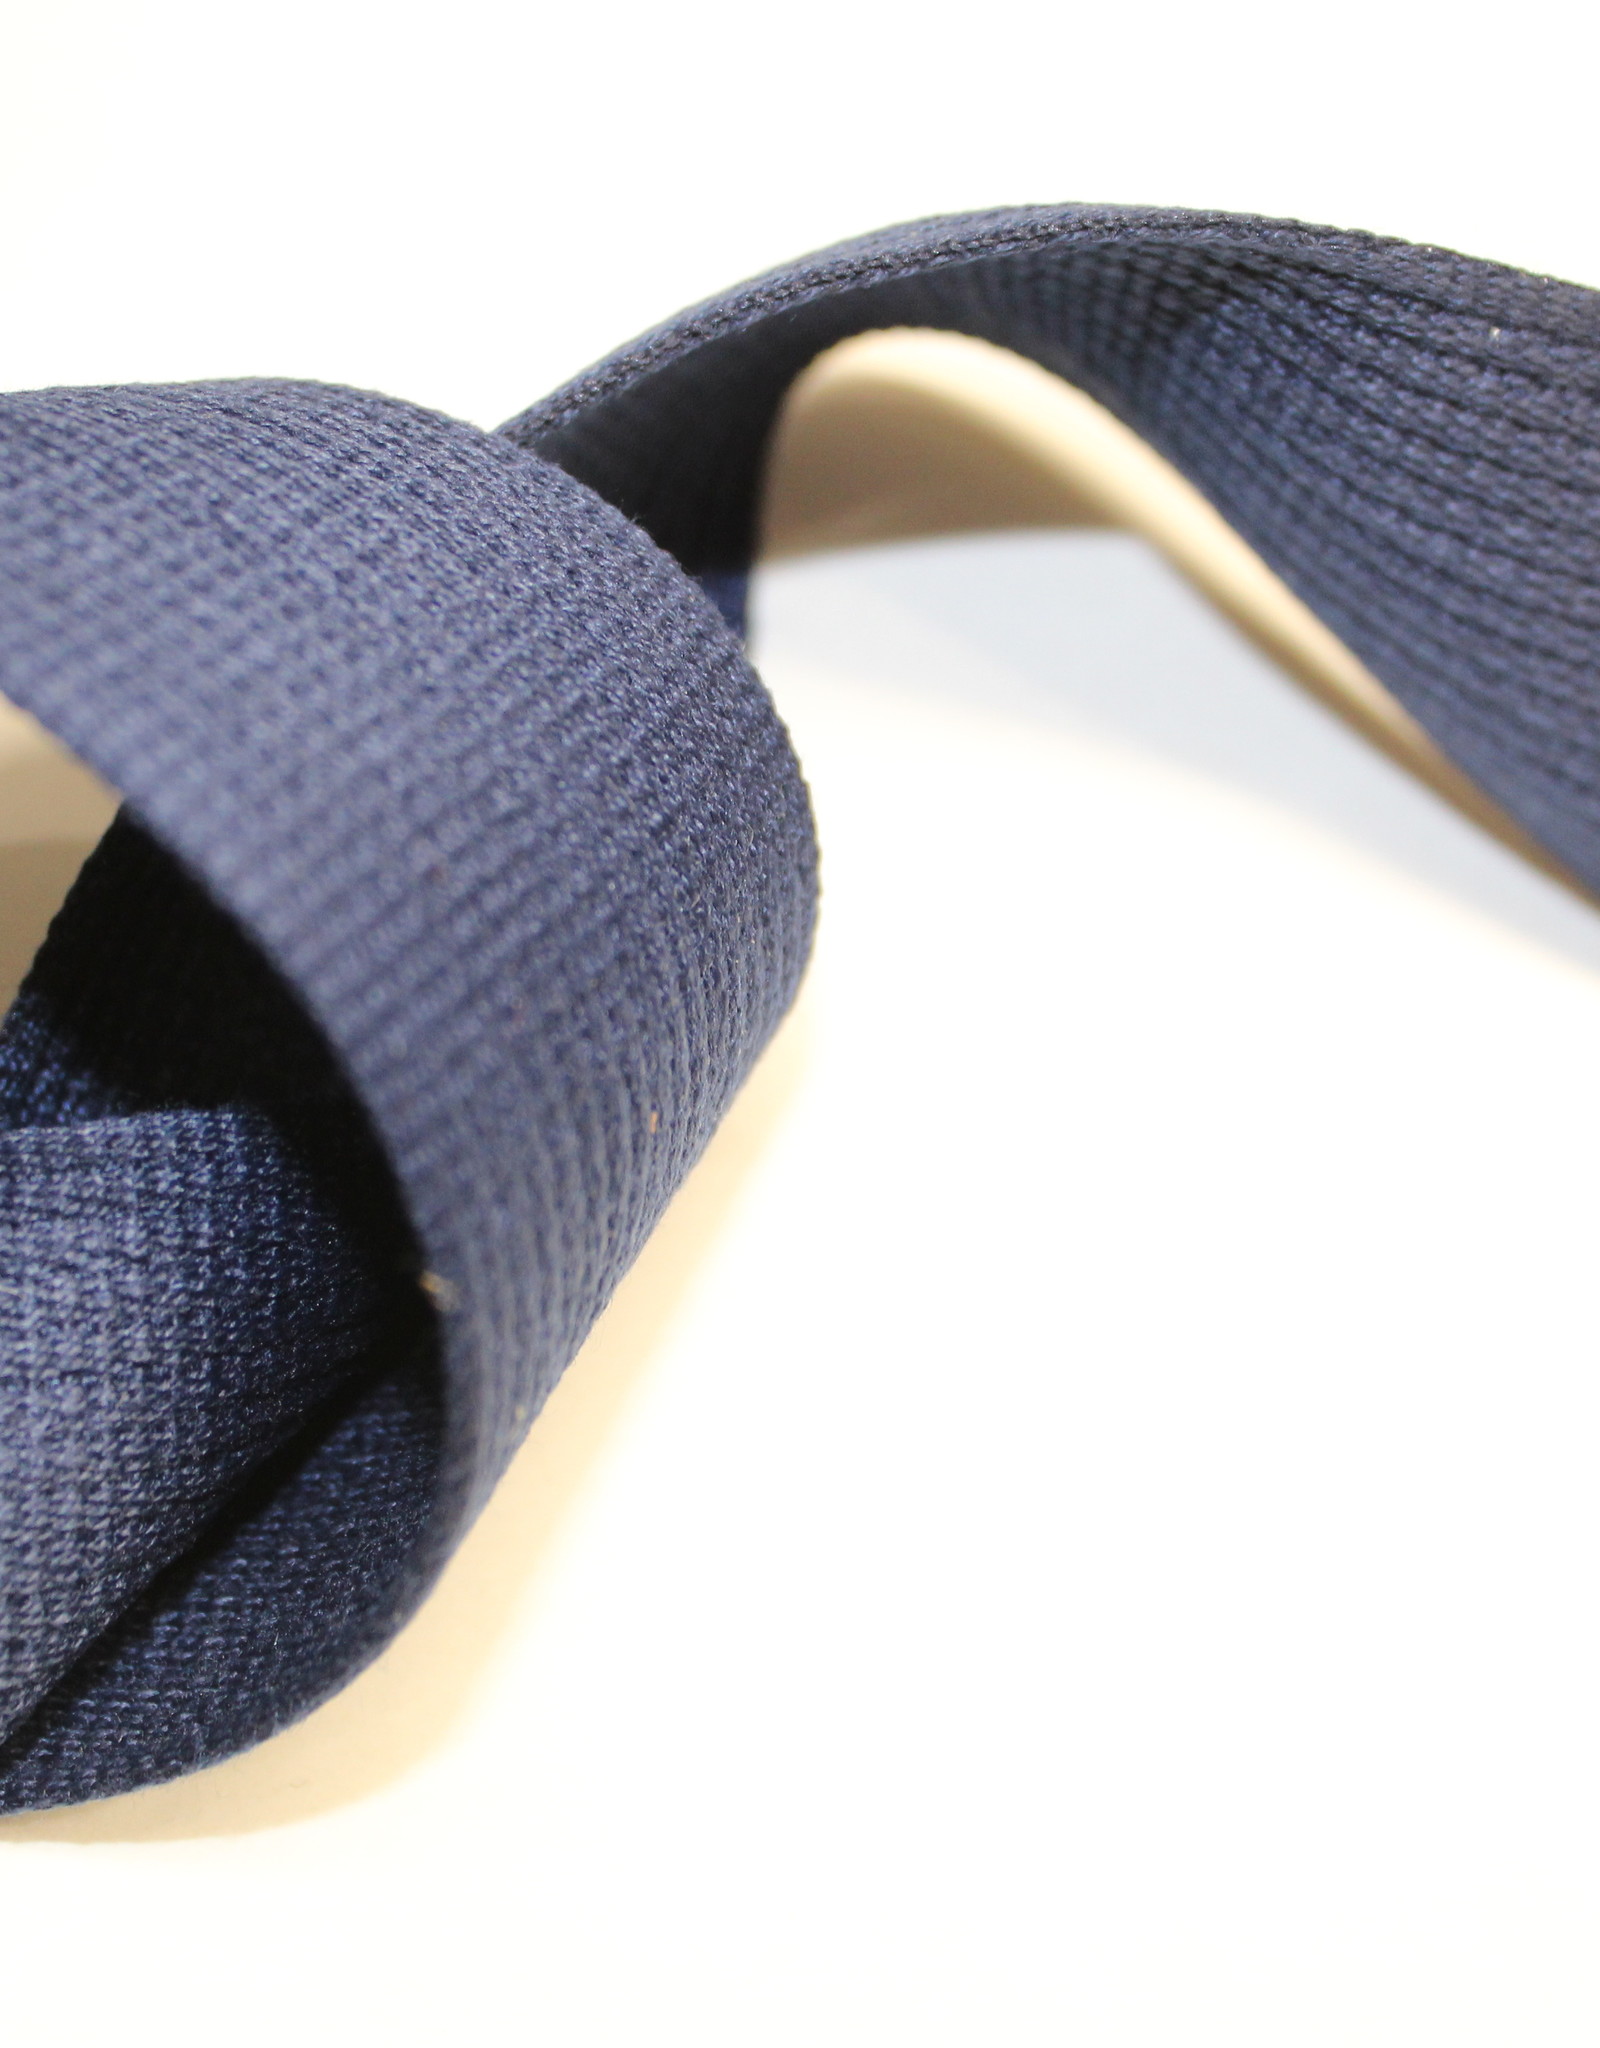 Soepele tassenband 40mm navy blauw